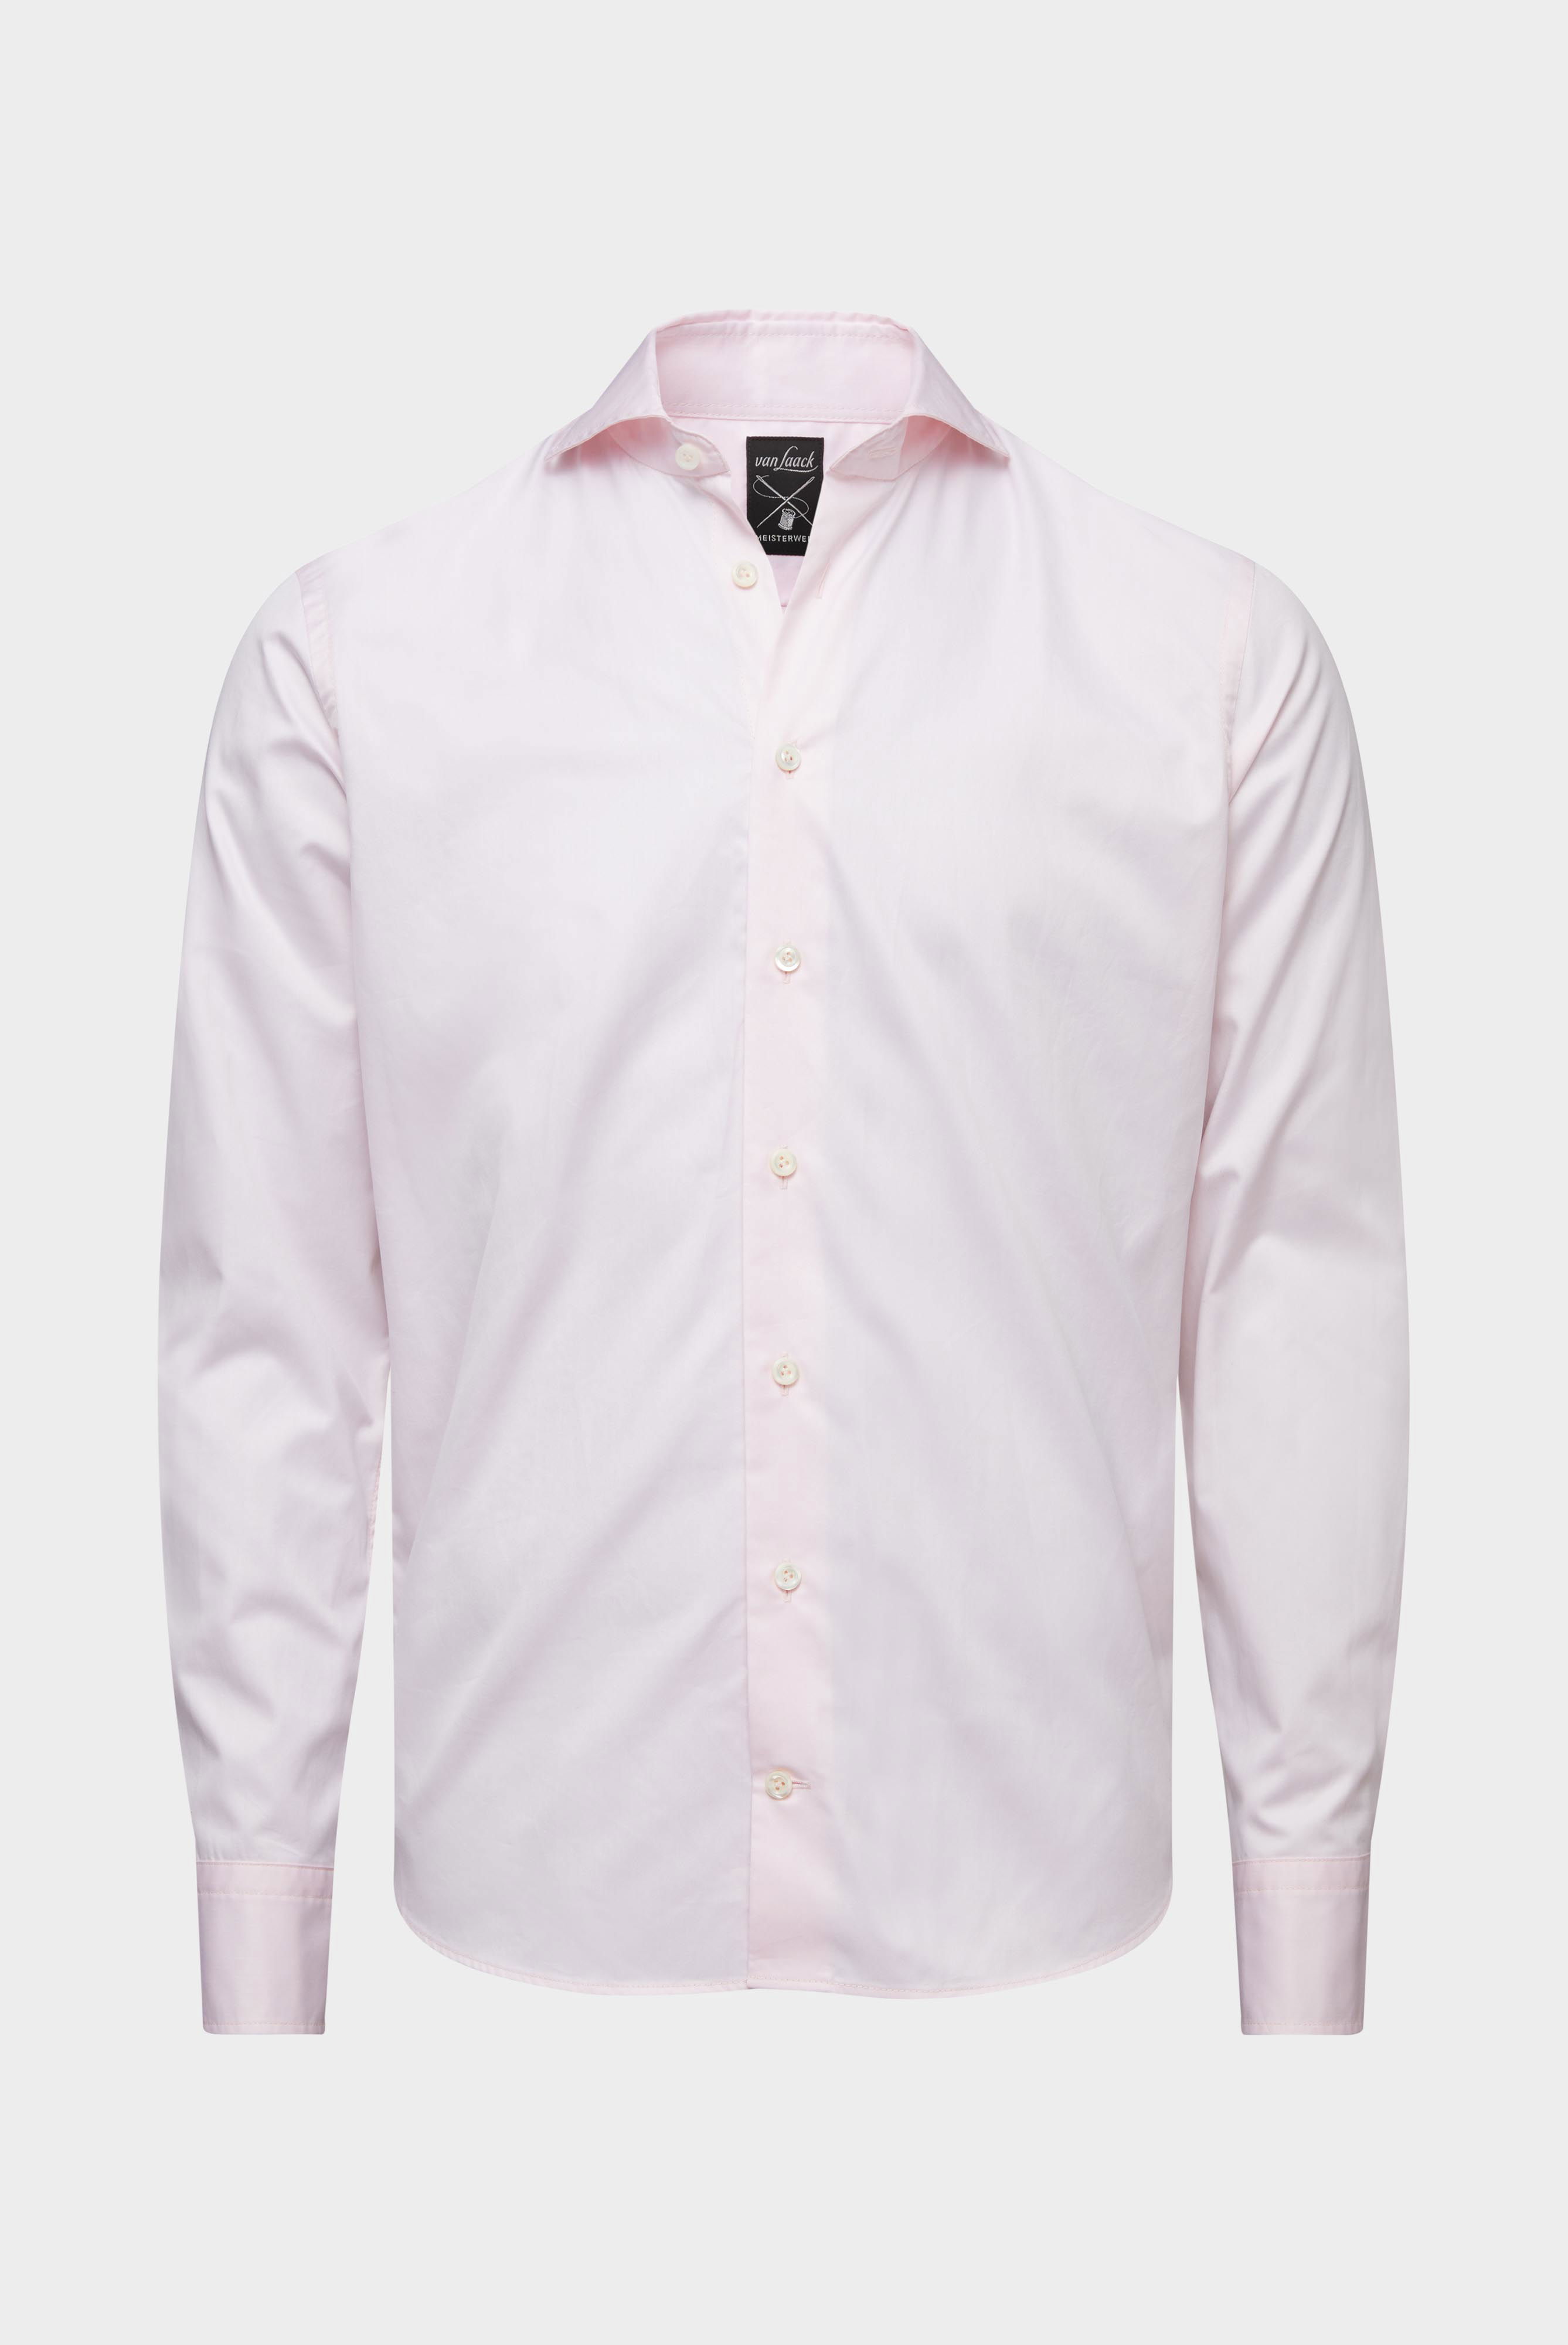 Business Hemden+Twill Hemd Slim Fit+20.2015.EB.160708.520.38